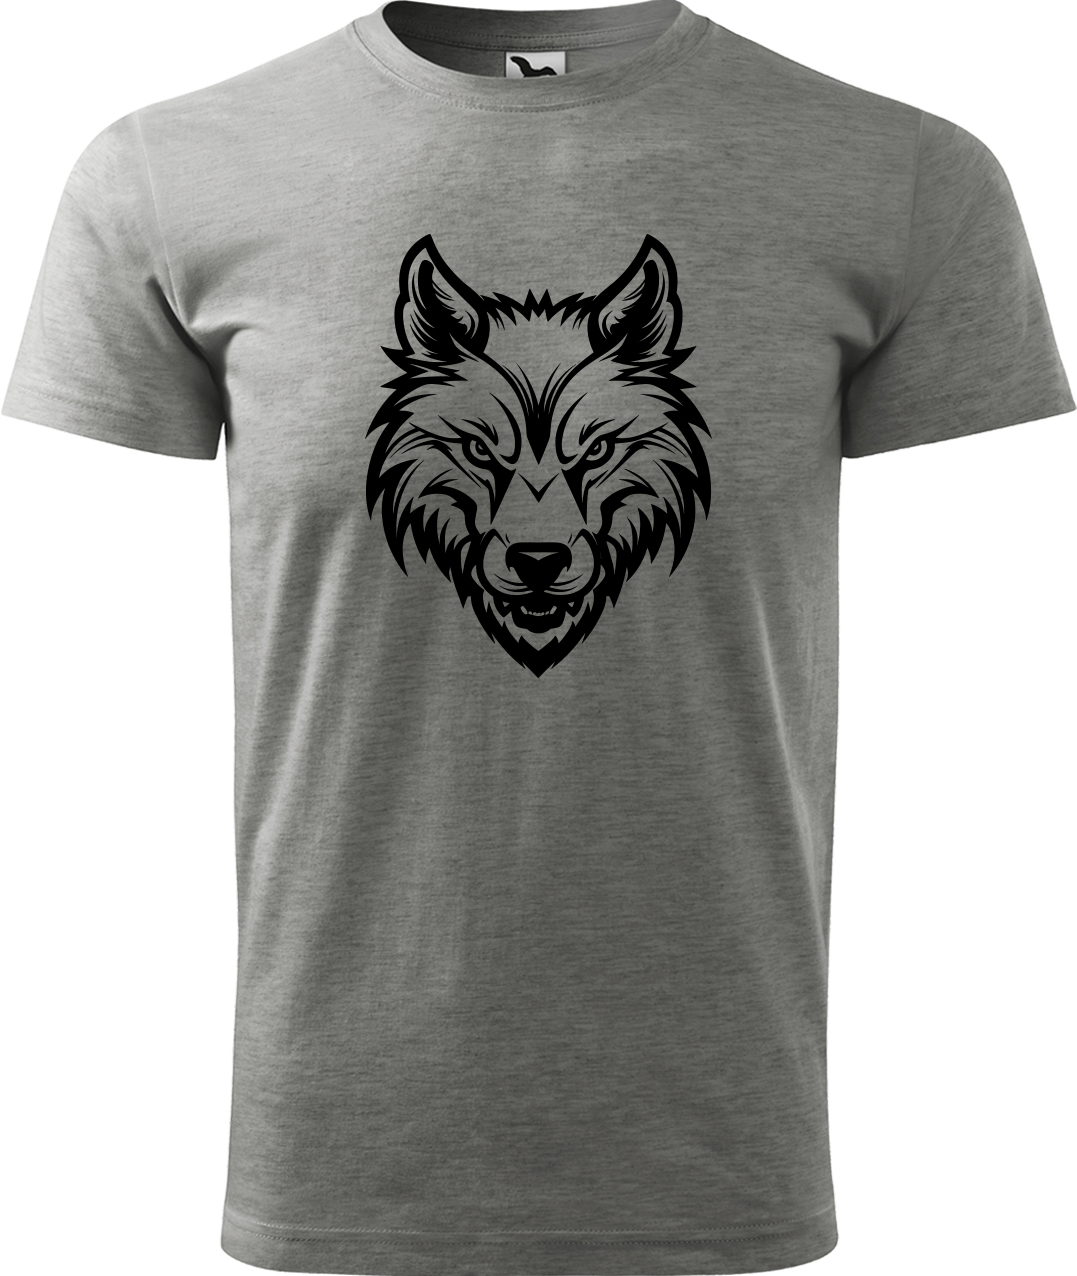 Pánské tričko s vlkem - Alfa samec Velikost: M, Barva: Tmavě šedý melír (12), Střih: pánský